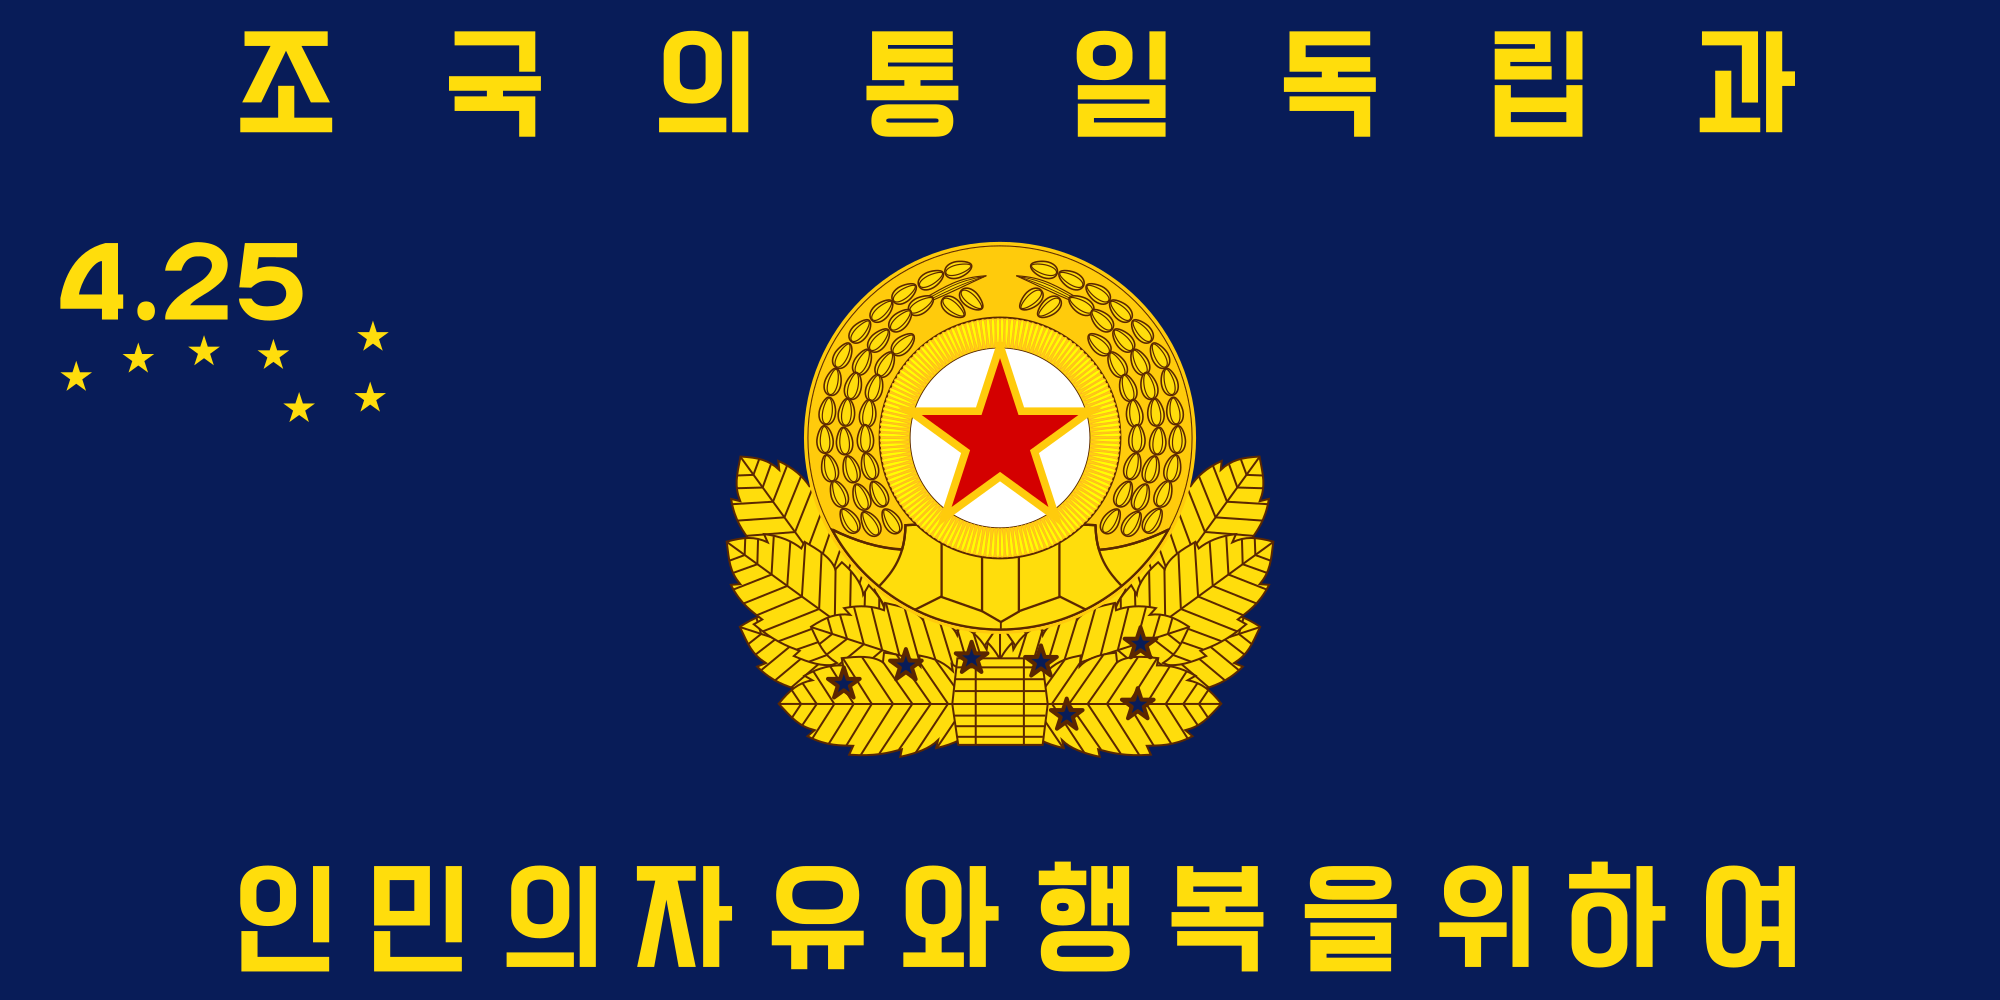 North Korea Flag Military Communism 2000x1000